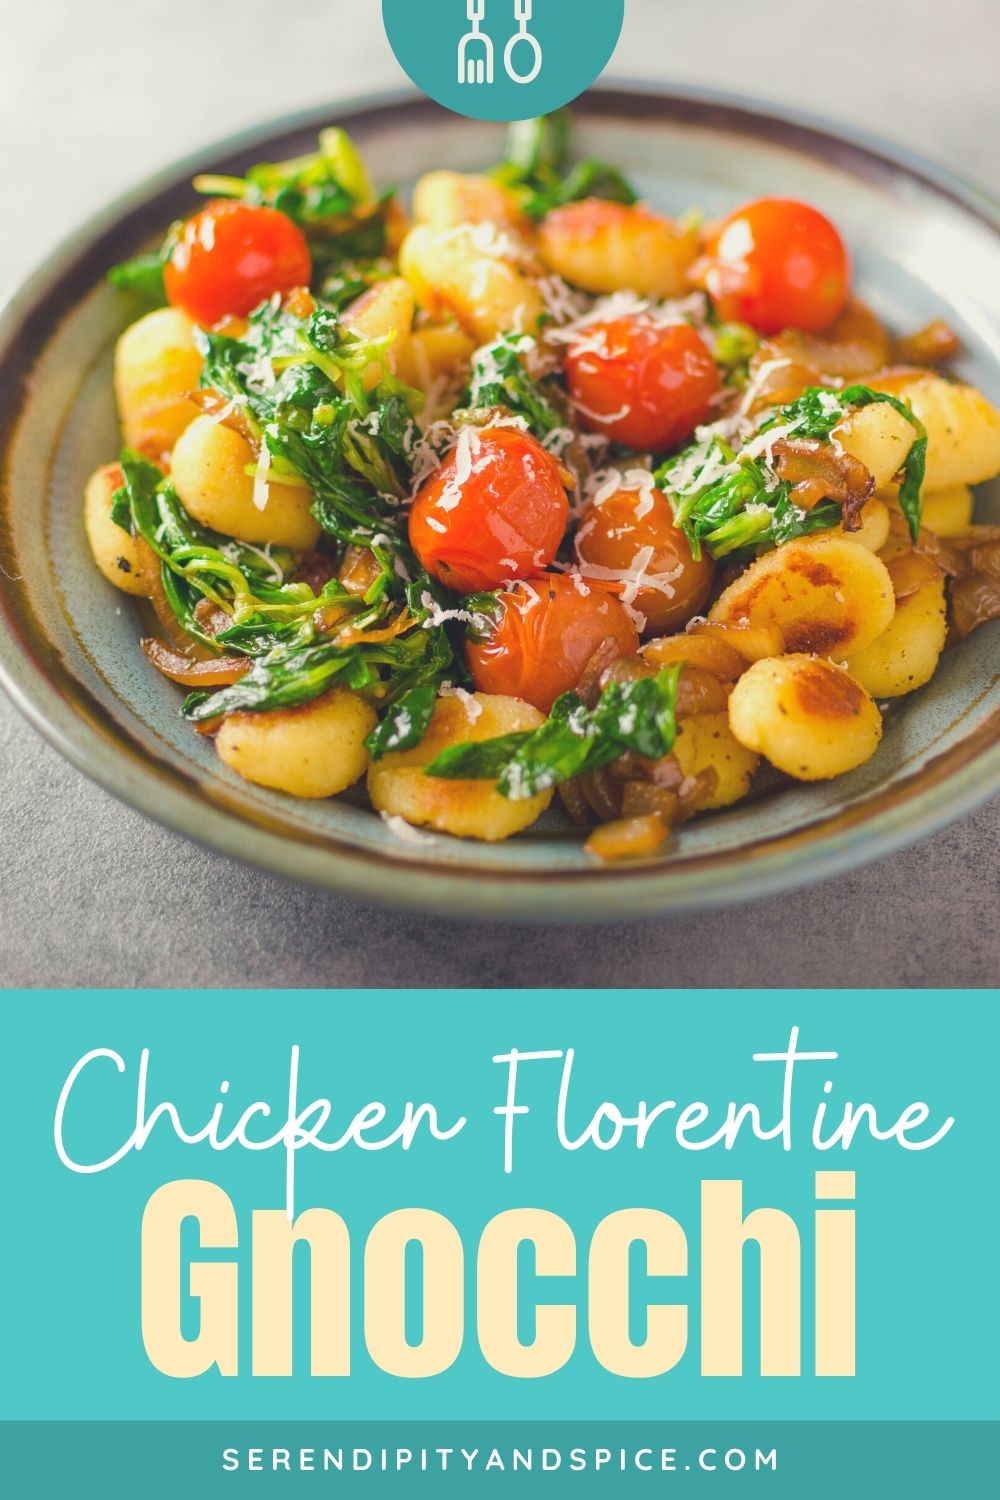 Chicken & Gnocchi Recipe